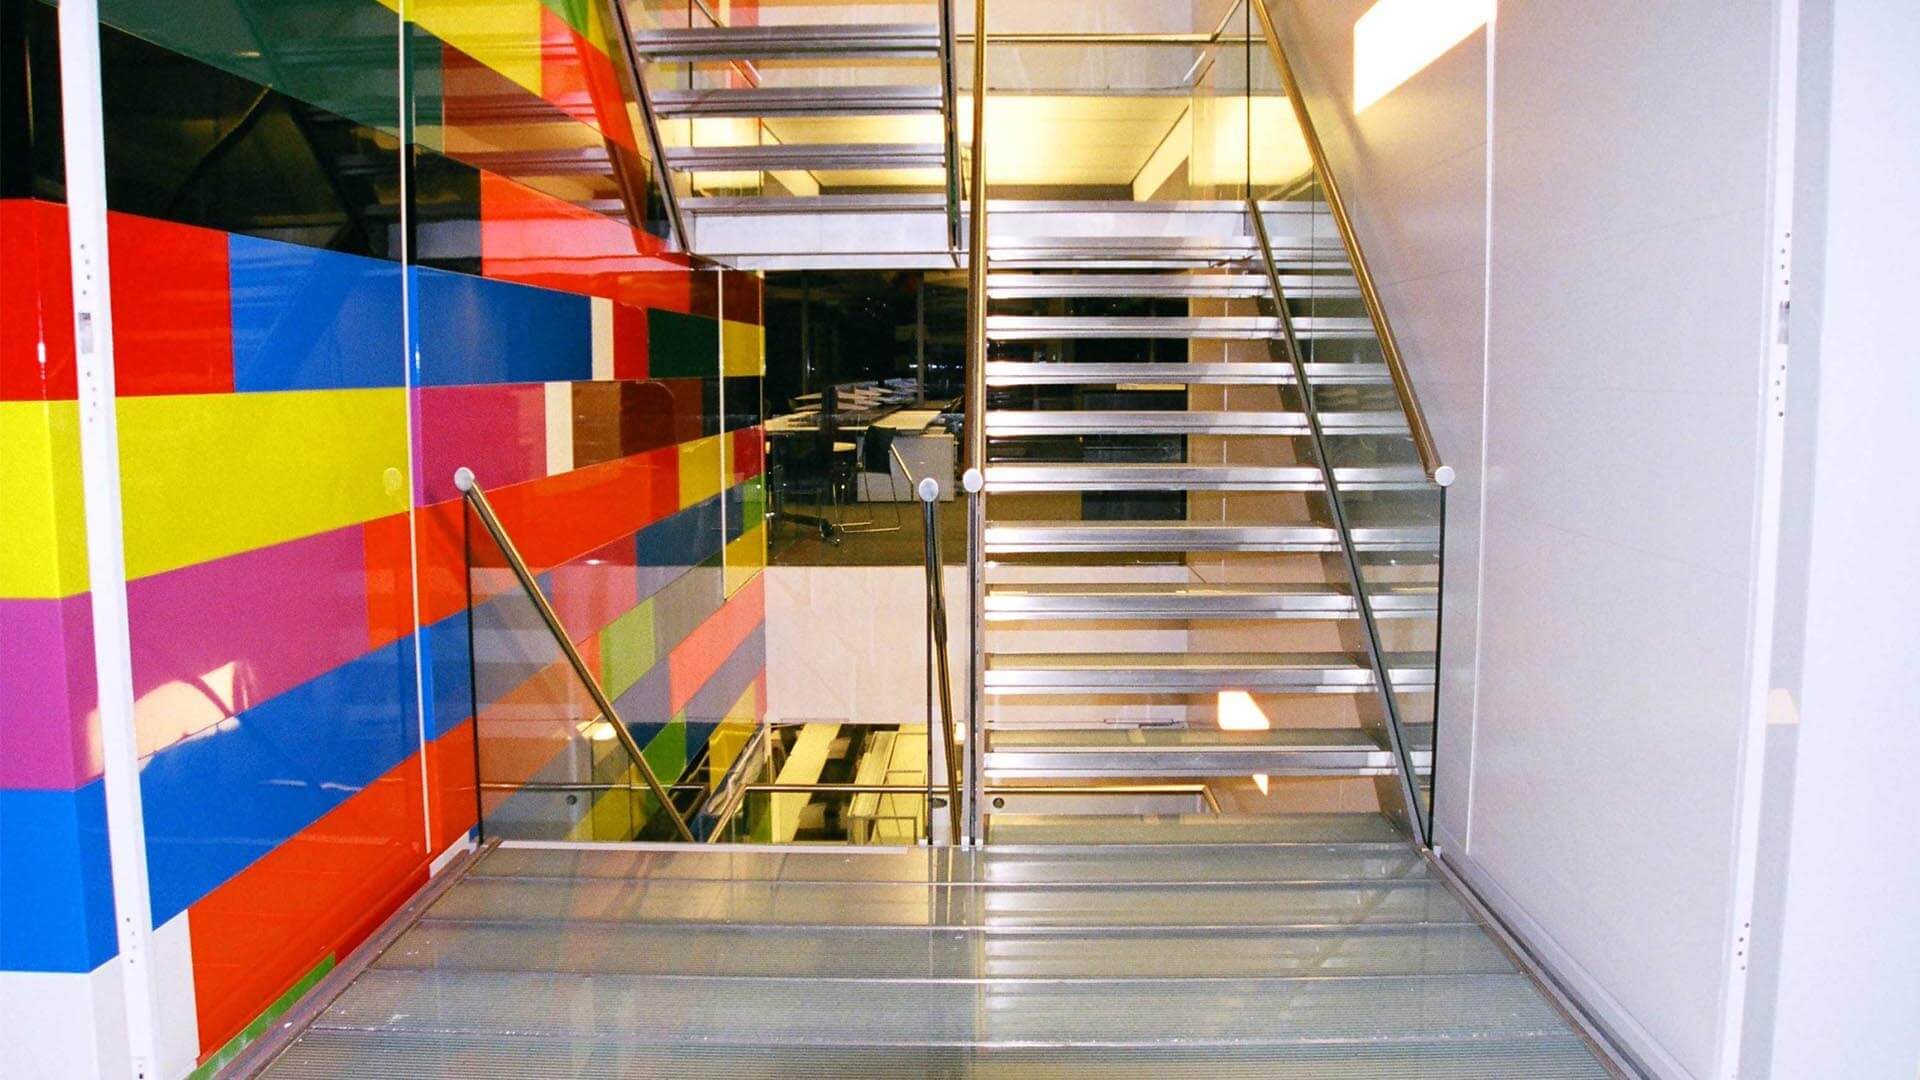 Deutsche Bank Walter Reception Stair Artwork inside after Dobsonei fit out.